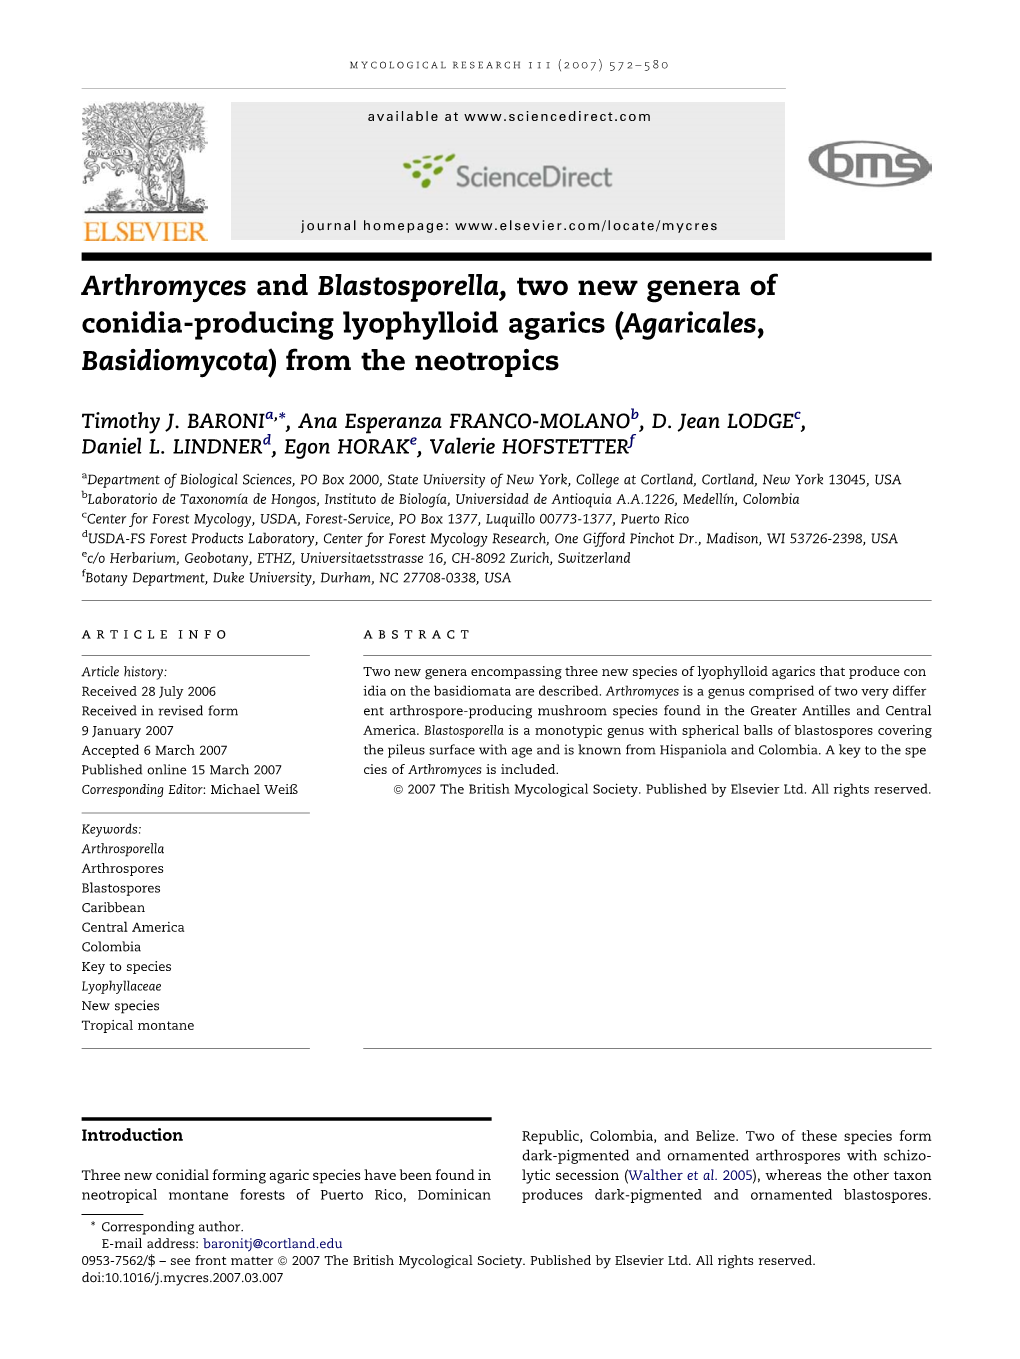 Arthromyces and Blastosporella, Two New Genera of Conidia-Producing Lyophylloid Argarics (Agaricales, Basidiomycota) from the Ne